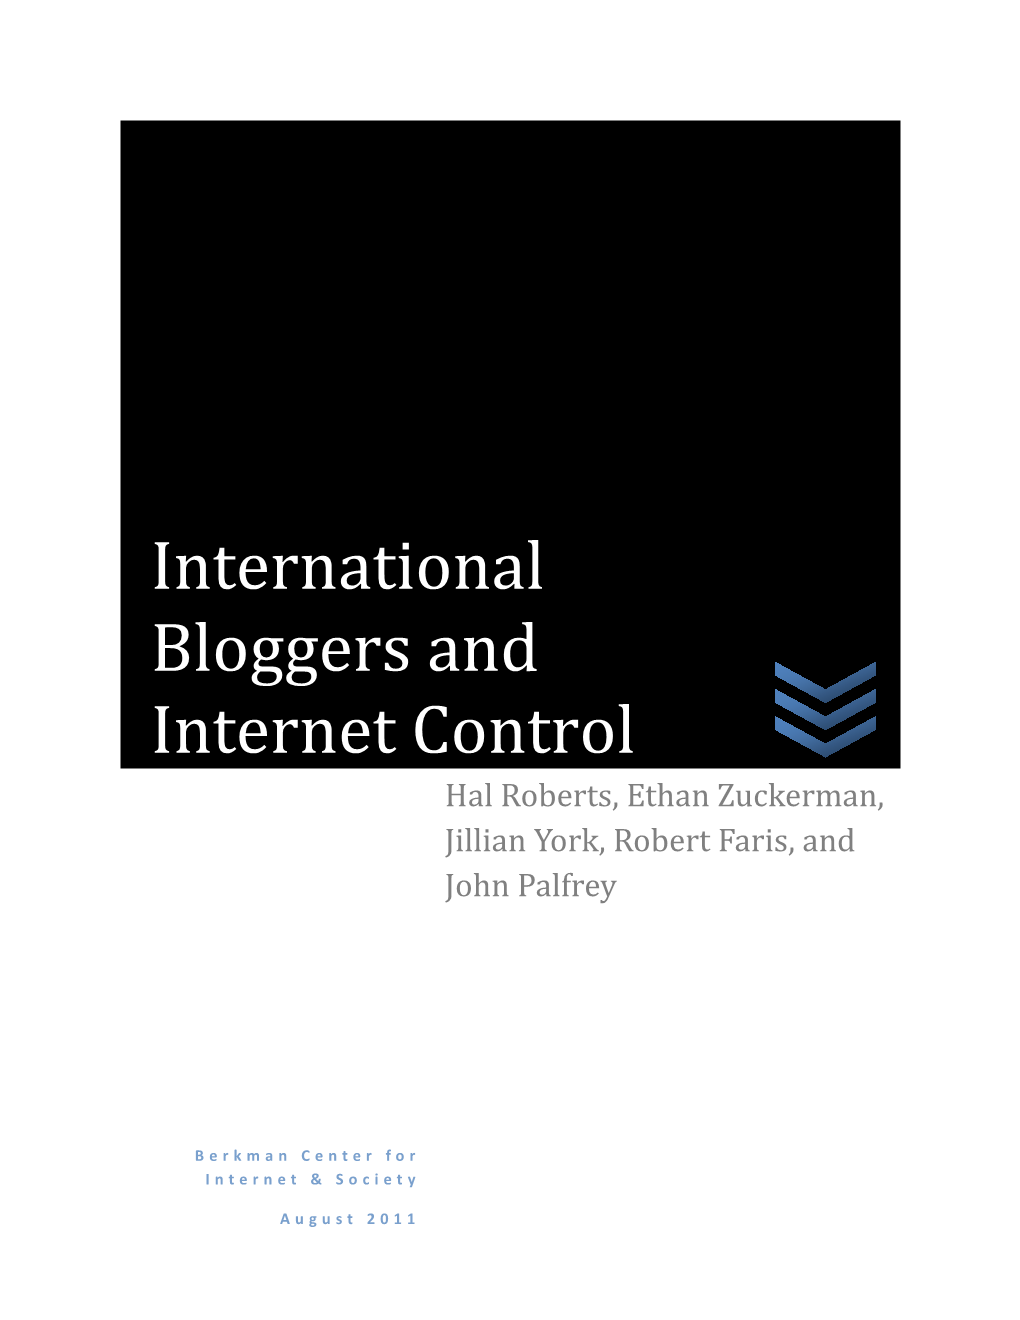 International Bloggers and Internet Control Hal Roberts, Ethan Zuckerman, Jillian York, Robert Faris, and John Palfrey